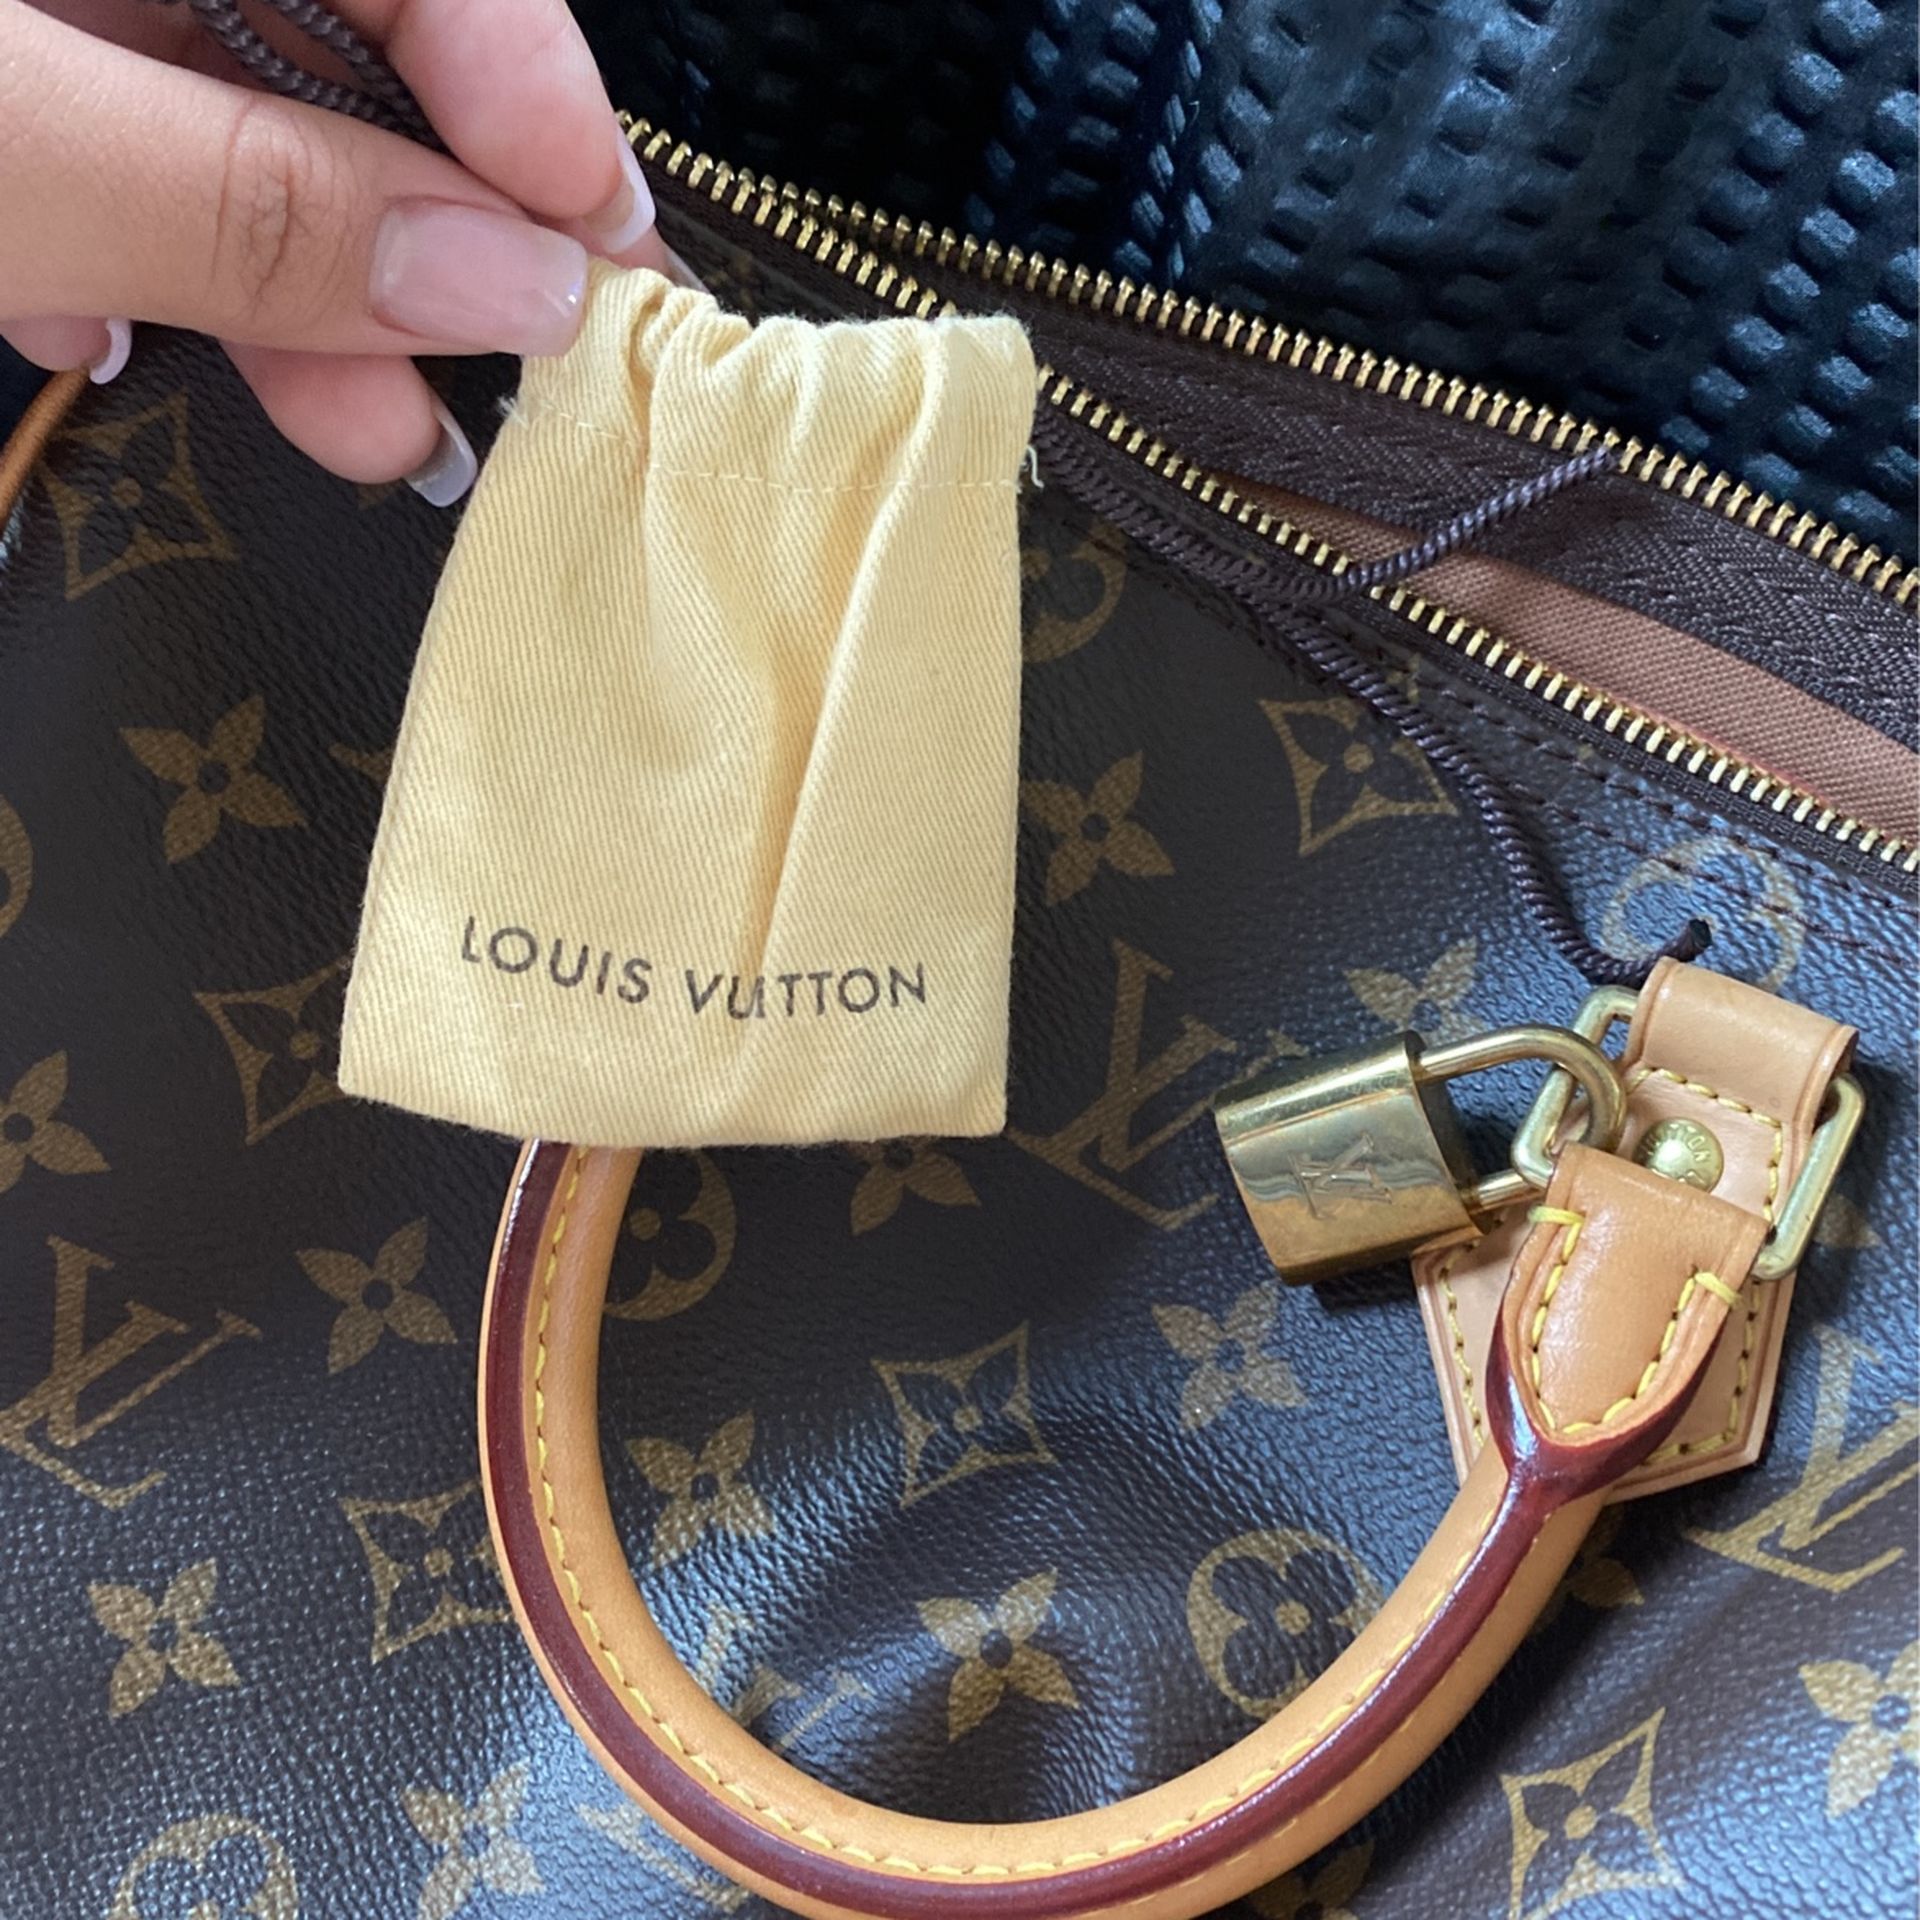 Reversible Authentic Louis Vuitton Bandeau for Sale in Aurora, IL - OfferUp